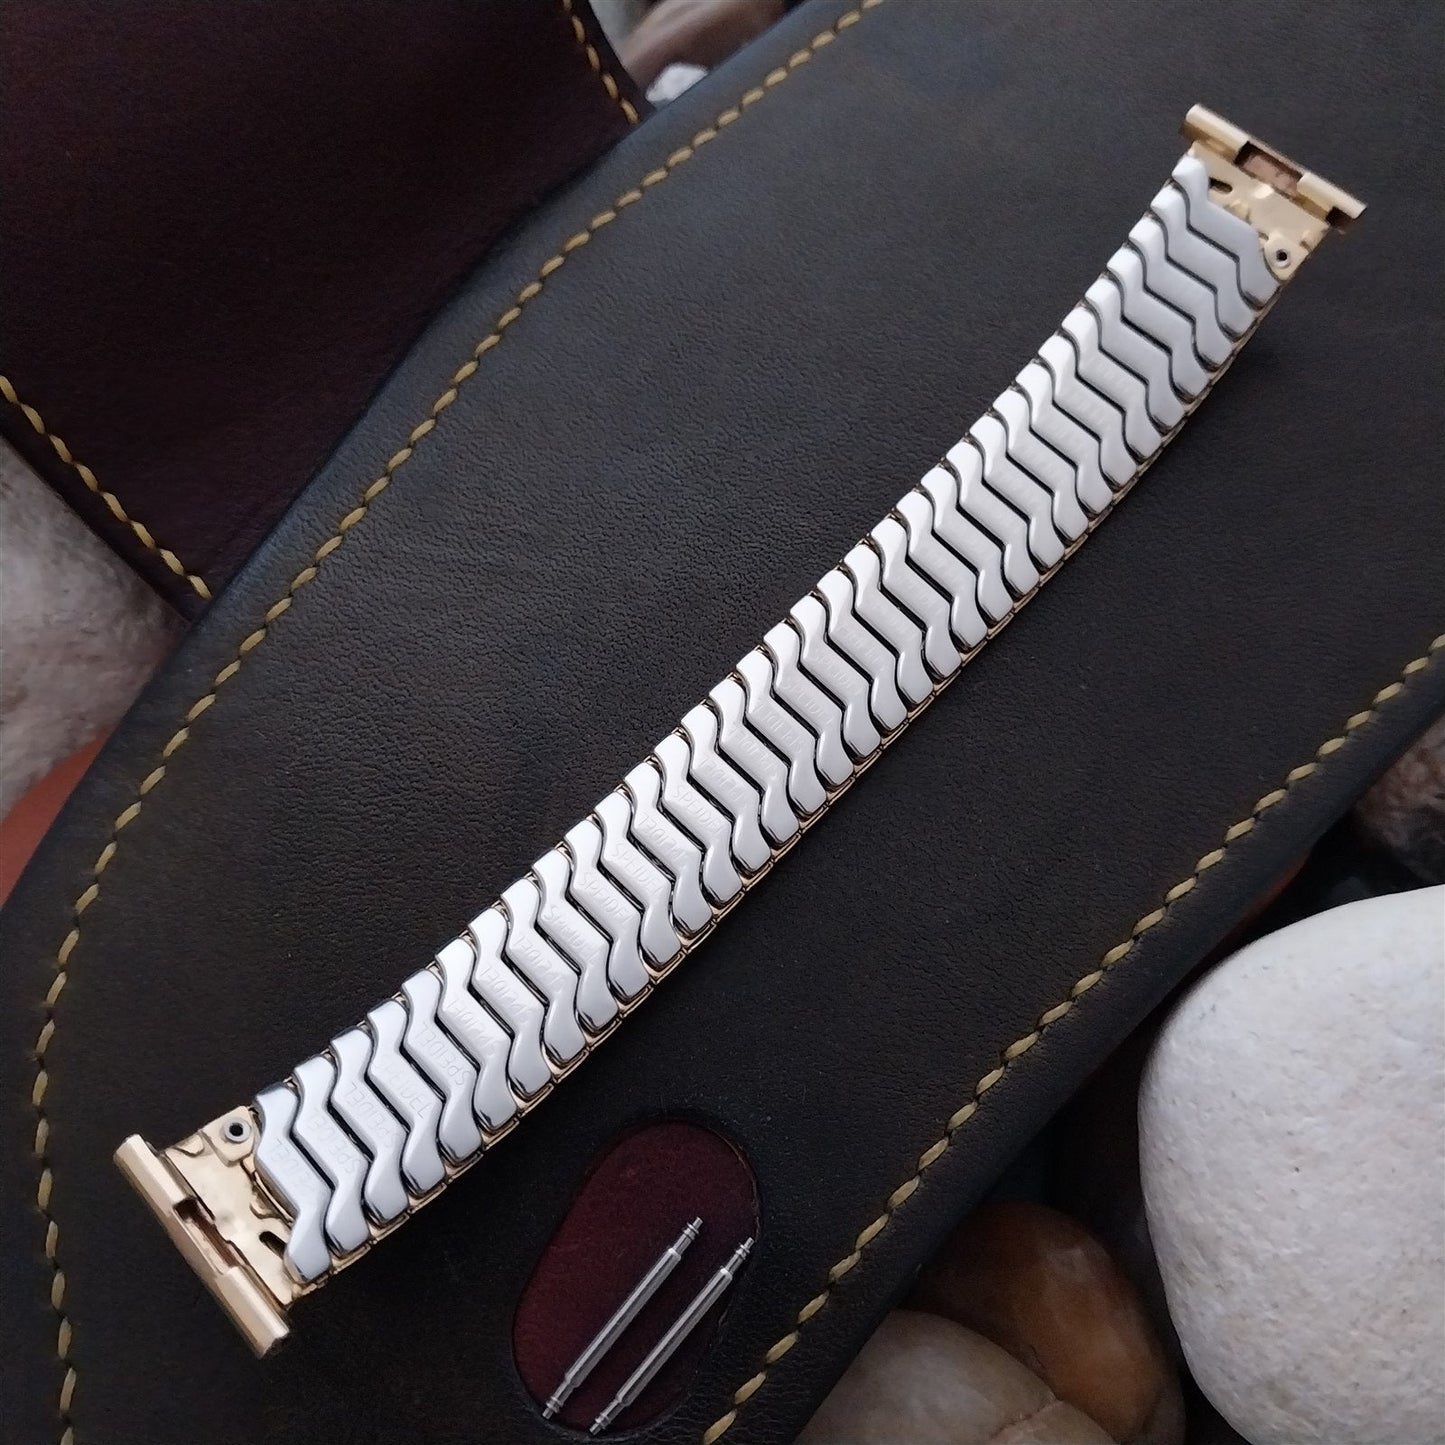 19mm 18mm 16mm 10k Gold-Filled Speidel Cortez Unused 1950s Vintage Watch Band